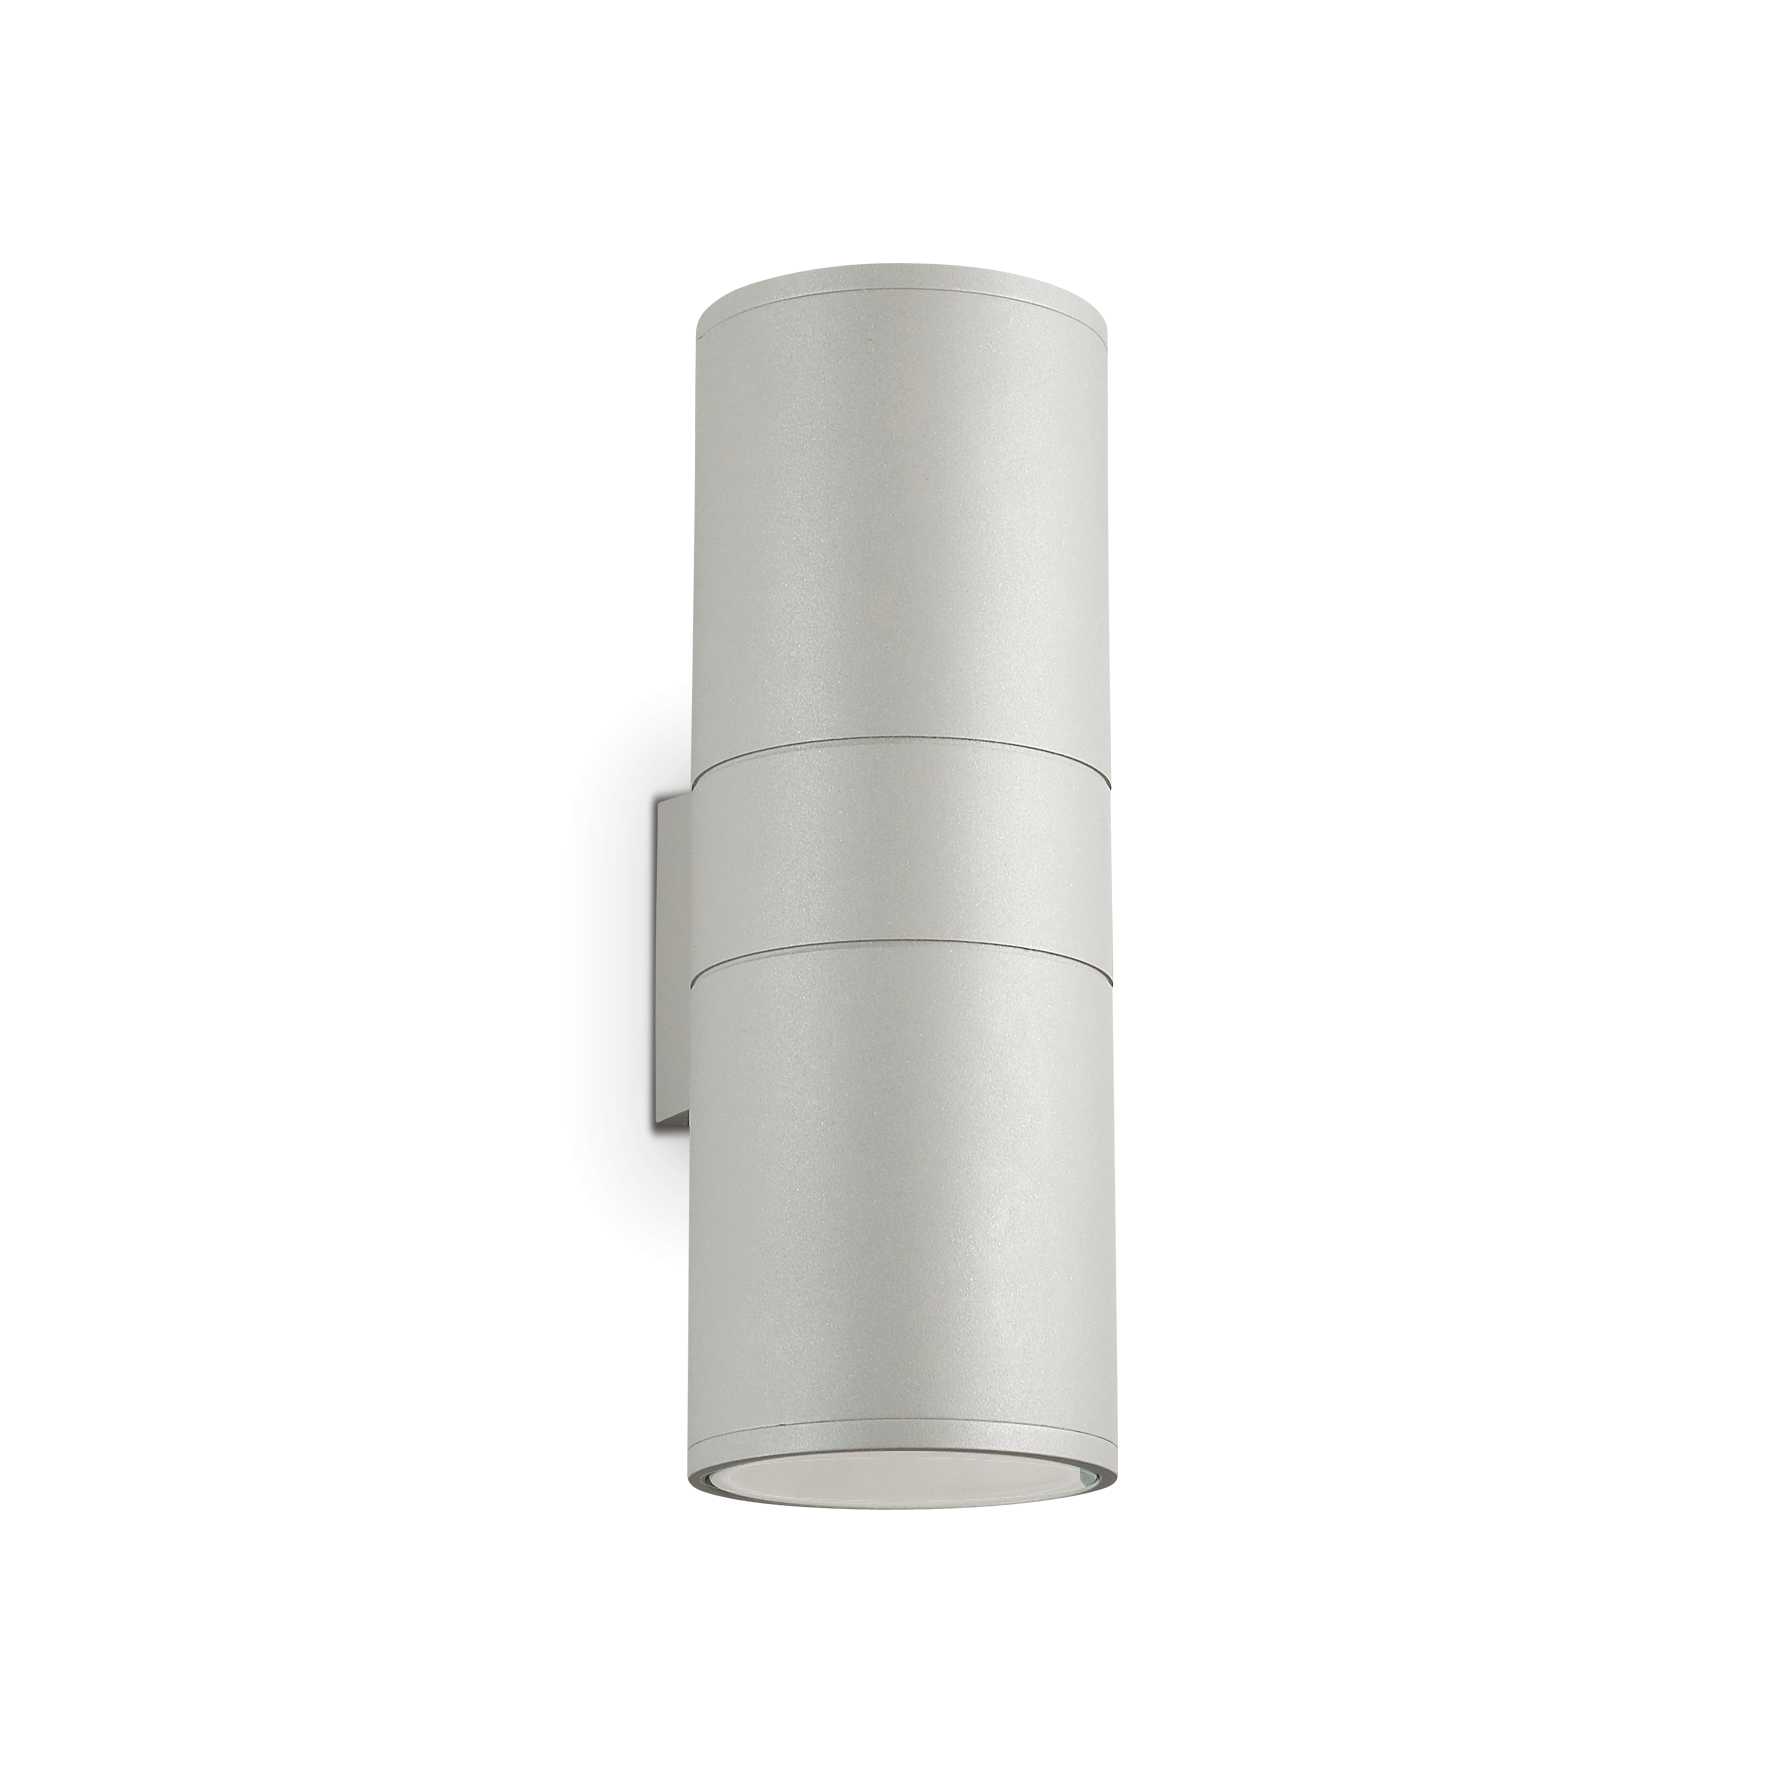 AD hotelska oprema Vanjska zidna lampa Gun ap2 velika- Sive boje slika proizvoda